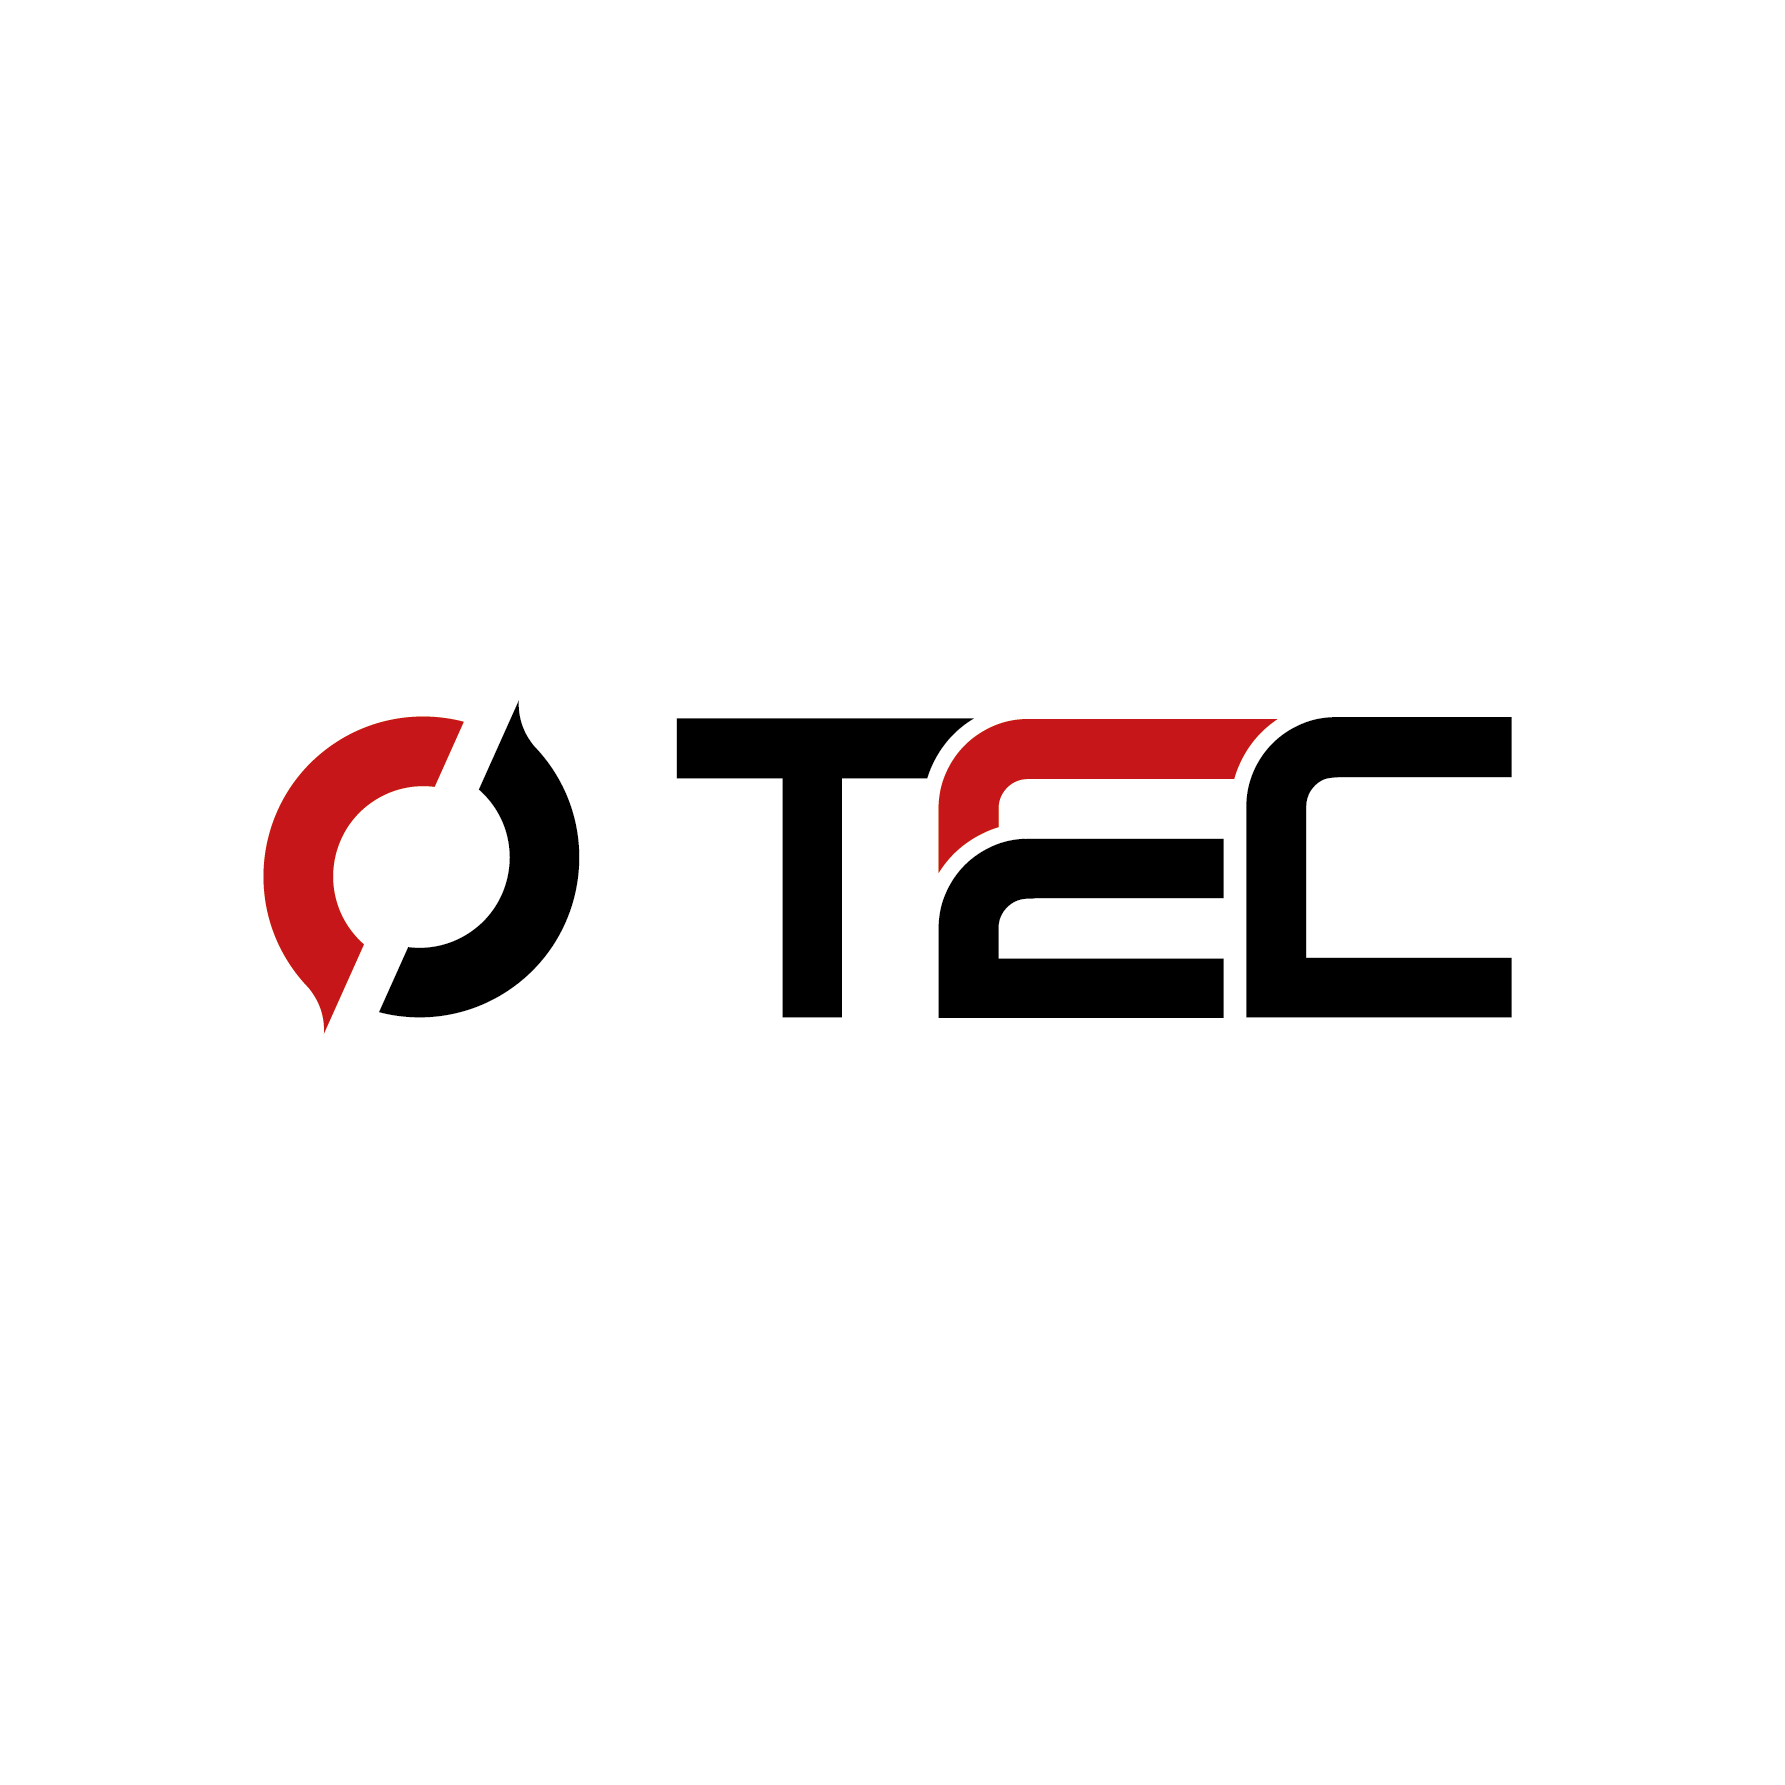 The modernized TEC identity logo on a white background.